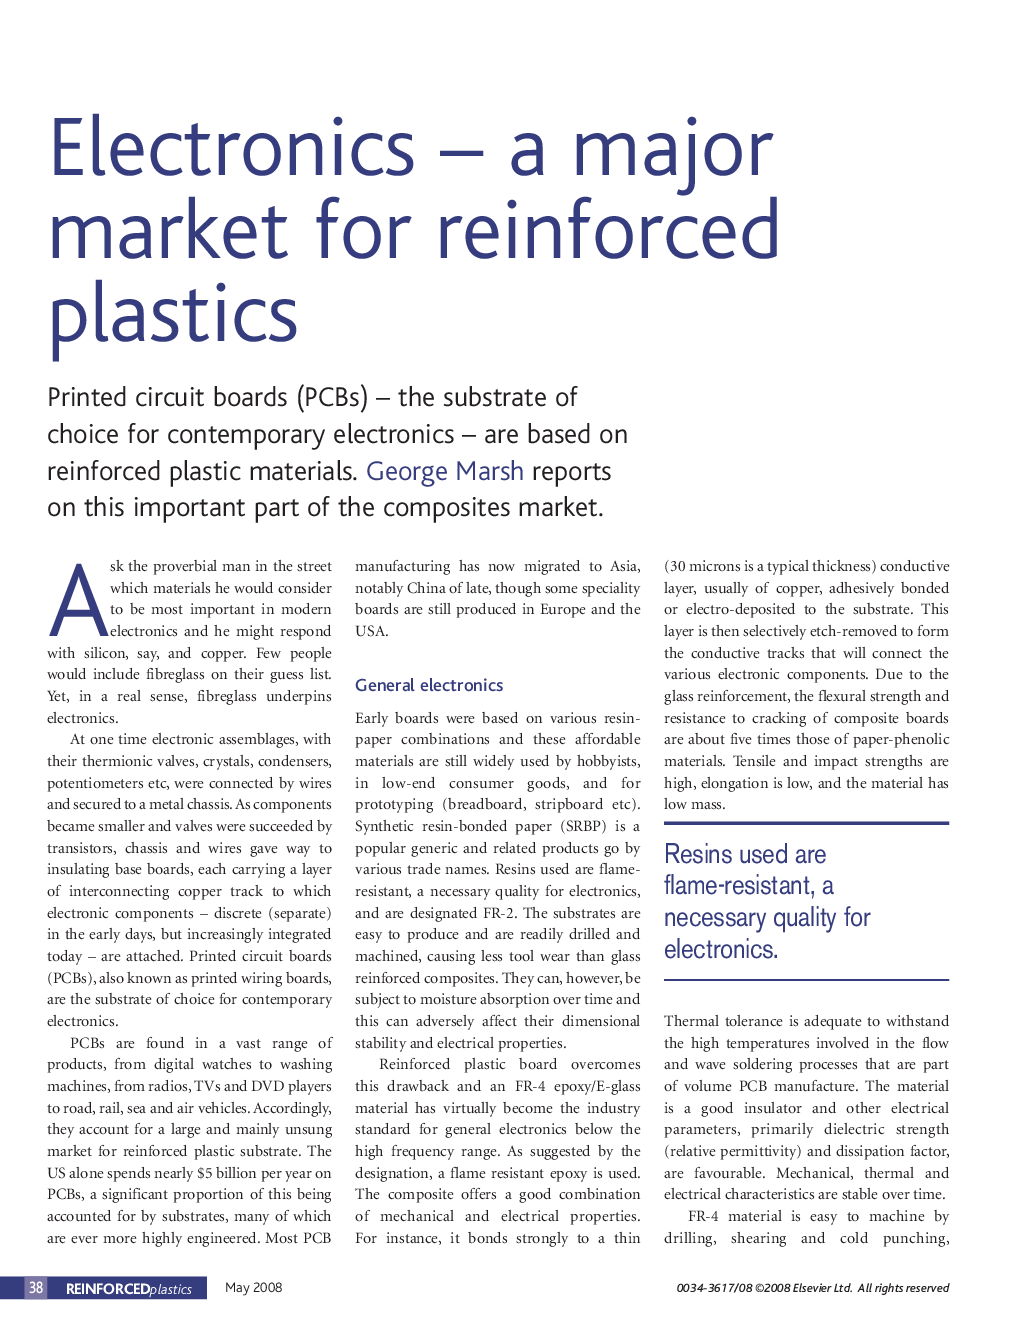 Electronics - a major market for reinforced plastics